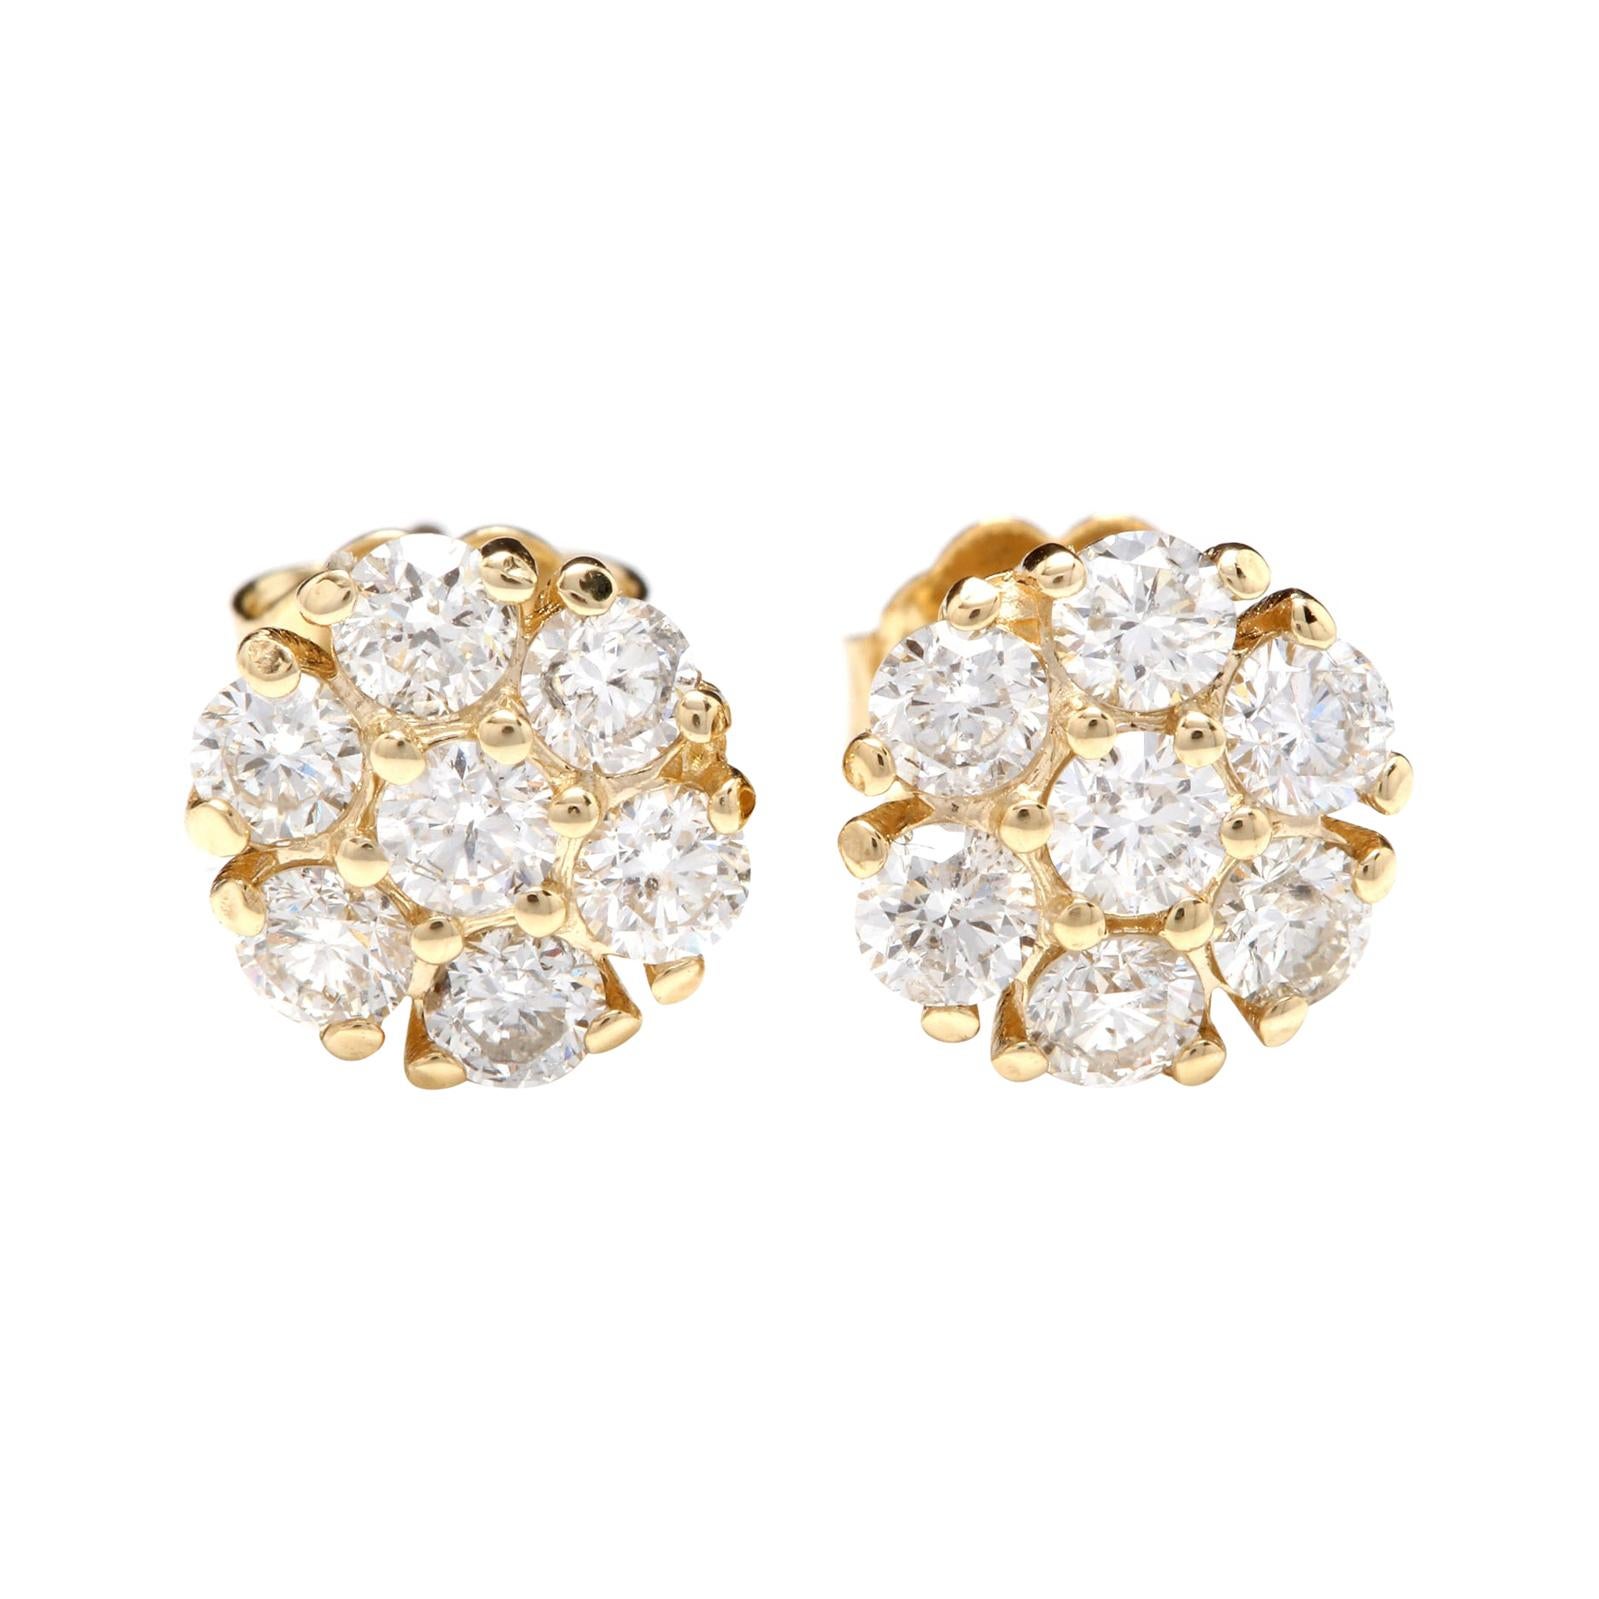 Exquisite 1.00 Carat Natural VS1-VS2 Diamond 14 Karat Solid Yellow Gold Earrings